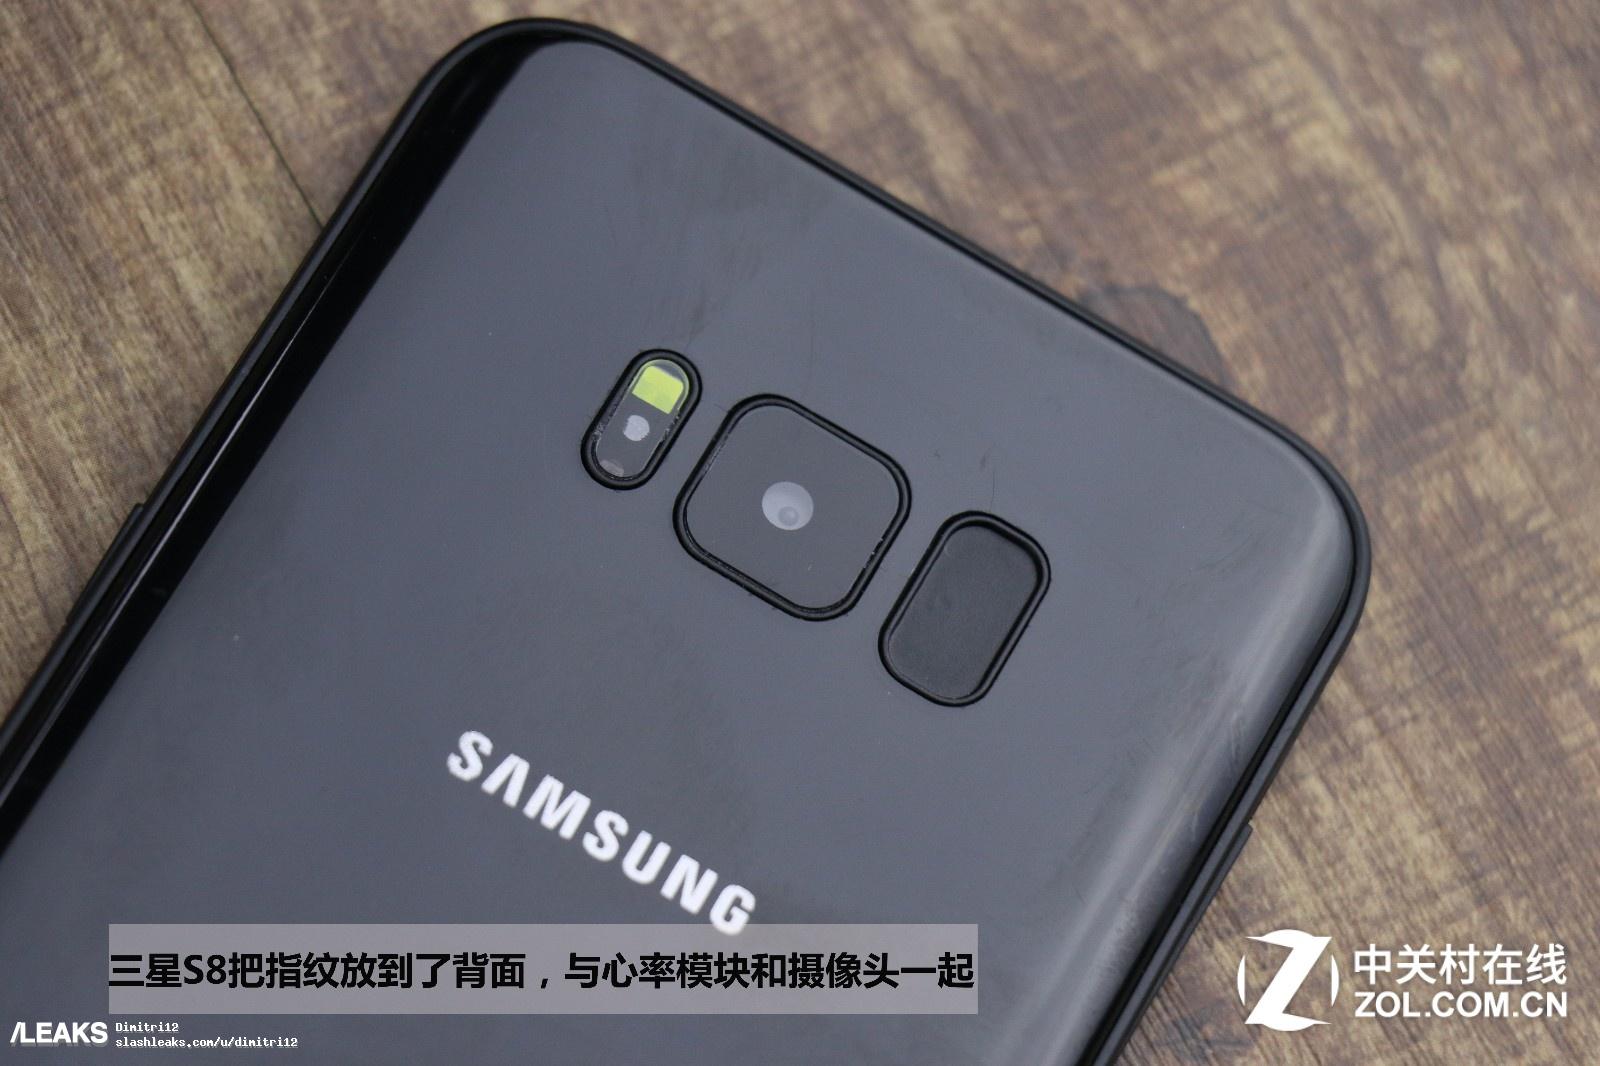 Galaxy S8 hands on video screenshot leak 1